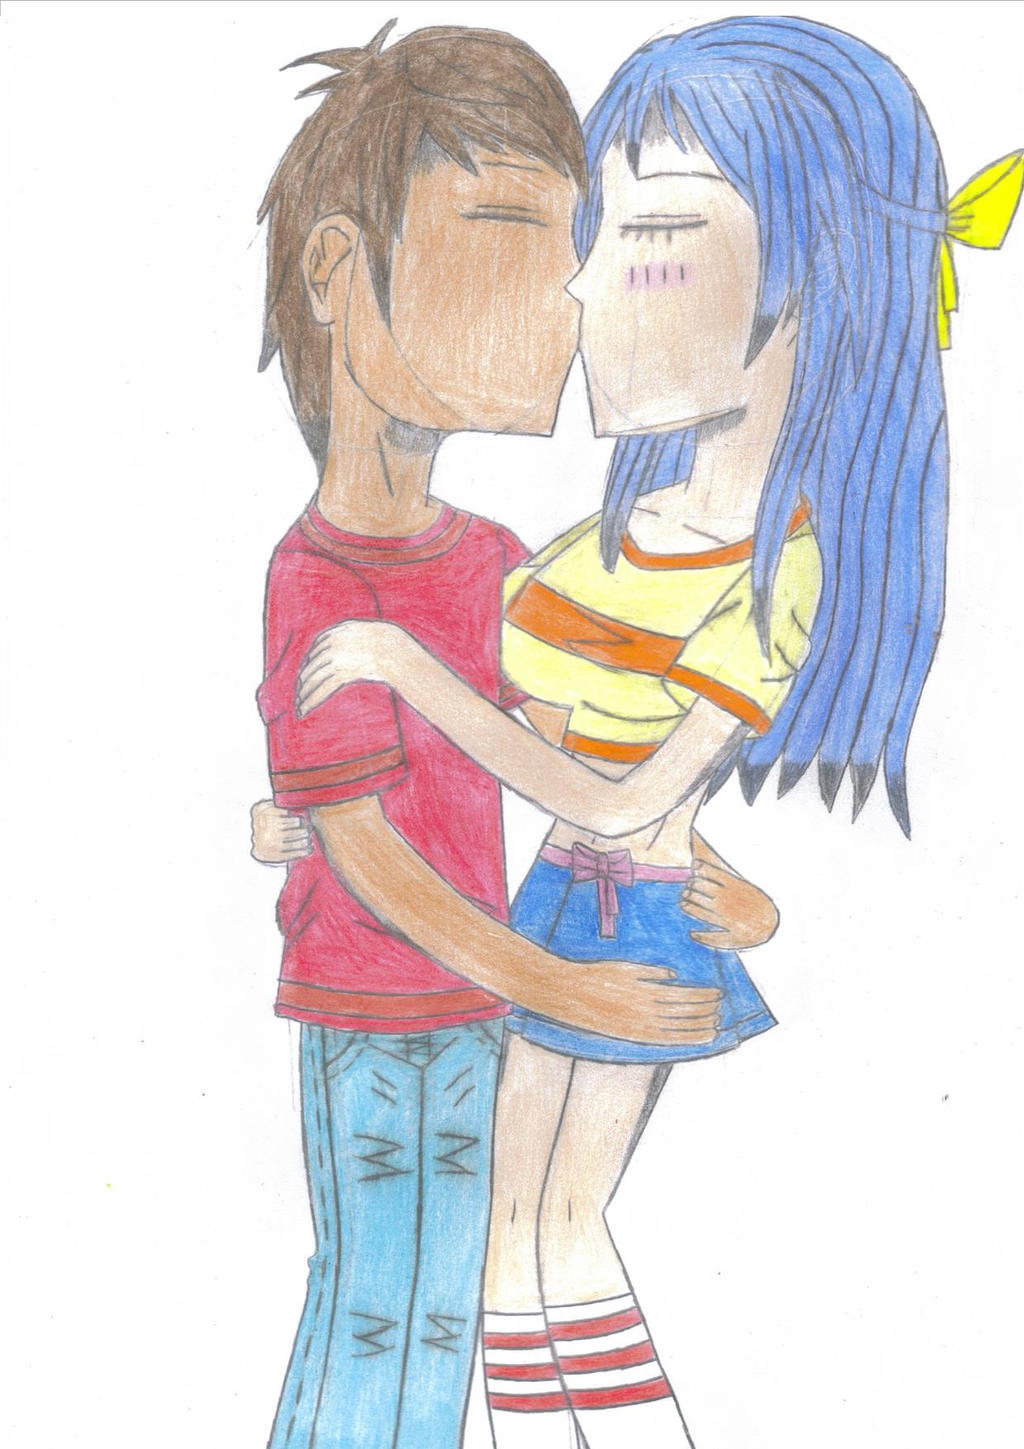 Anime boy and girl kissing drawing practice by CrimsonSkull18 on DeviantArt